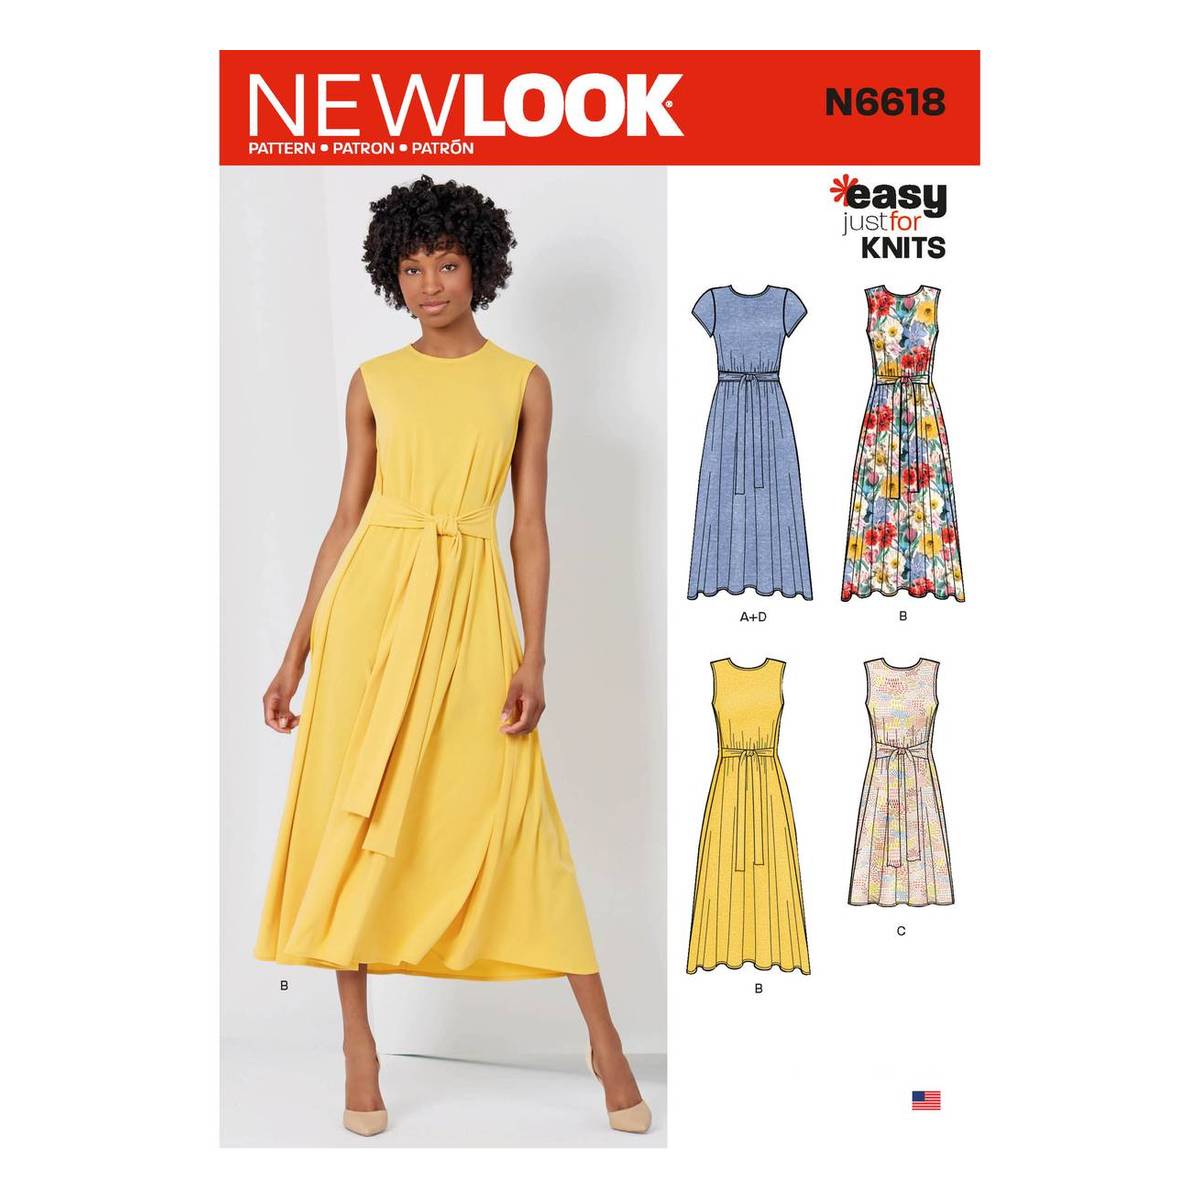 N6610 | New Look Sewing Pattern Toddlers' Dress | New Look